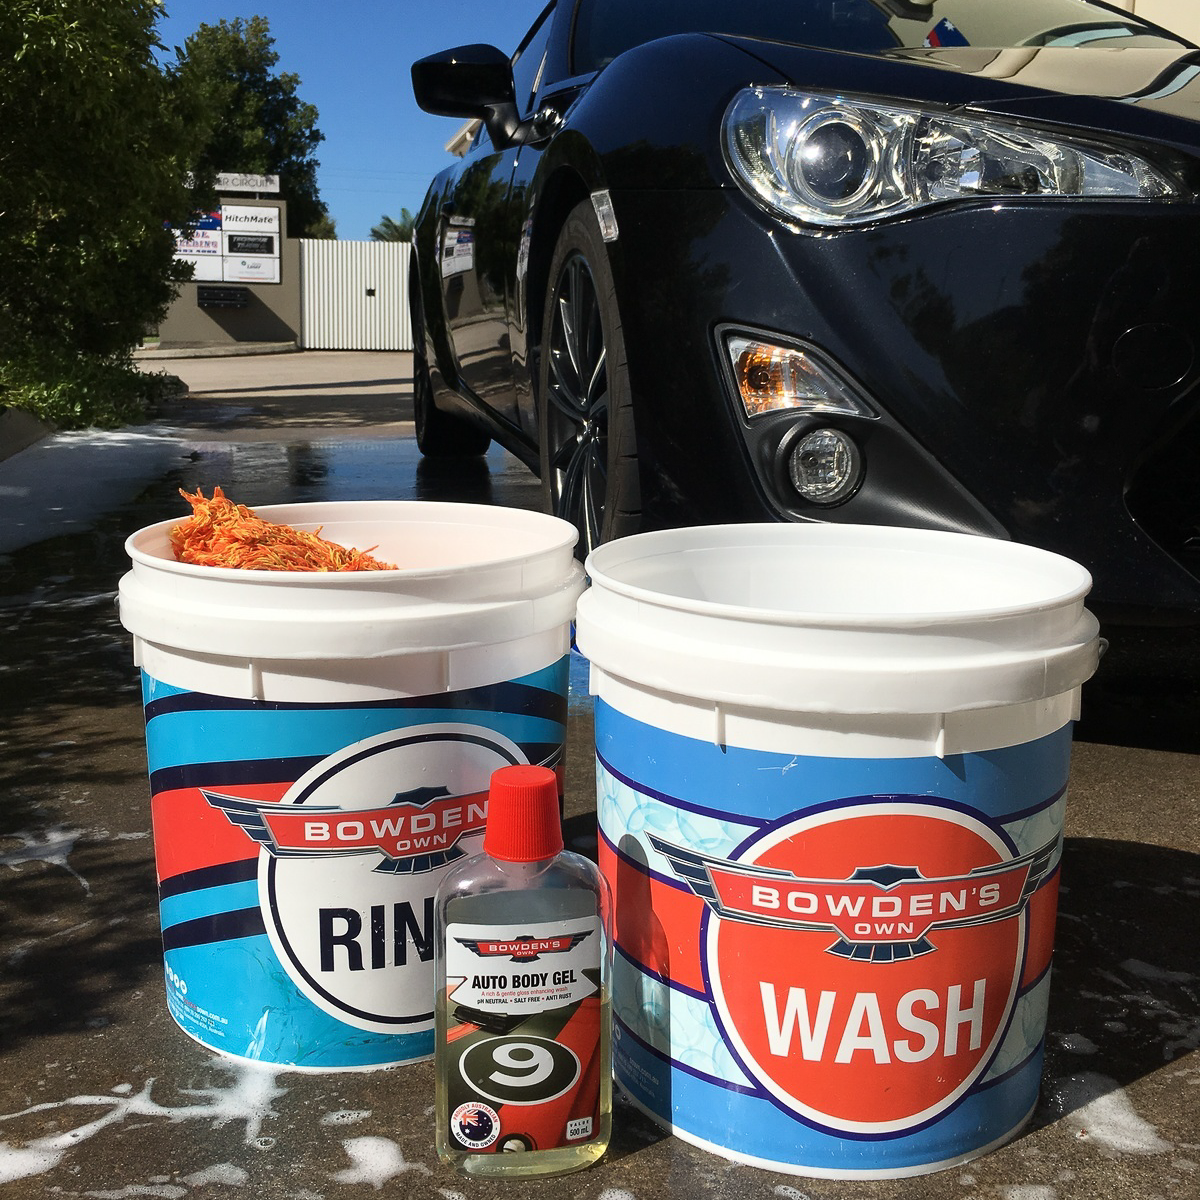 Auto Body Gel wash is a brilliant Aussie all rounder.